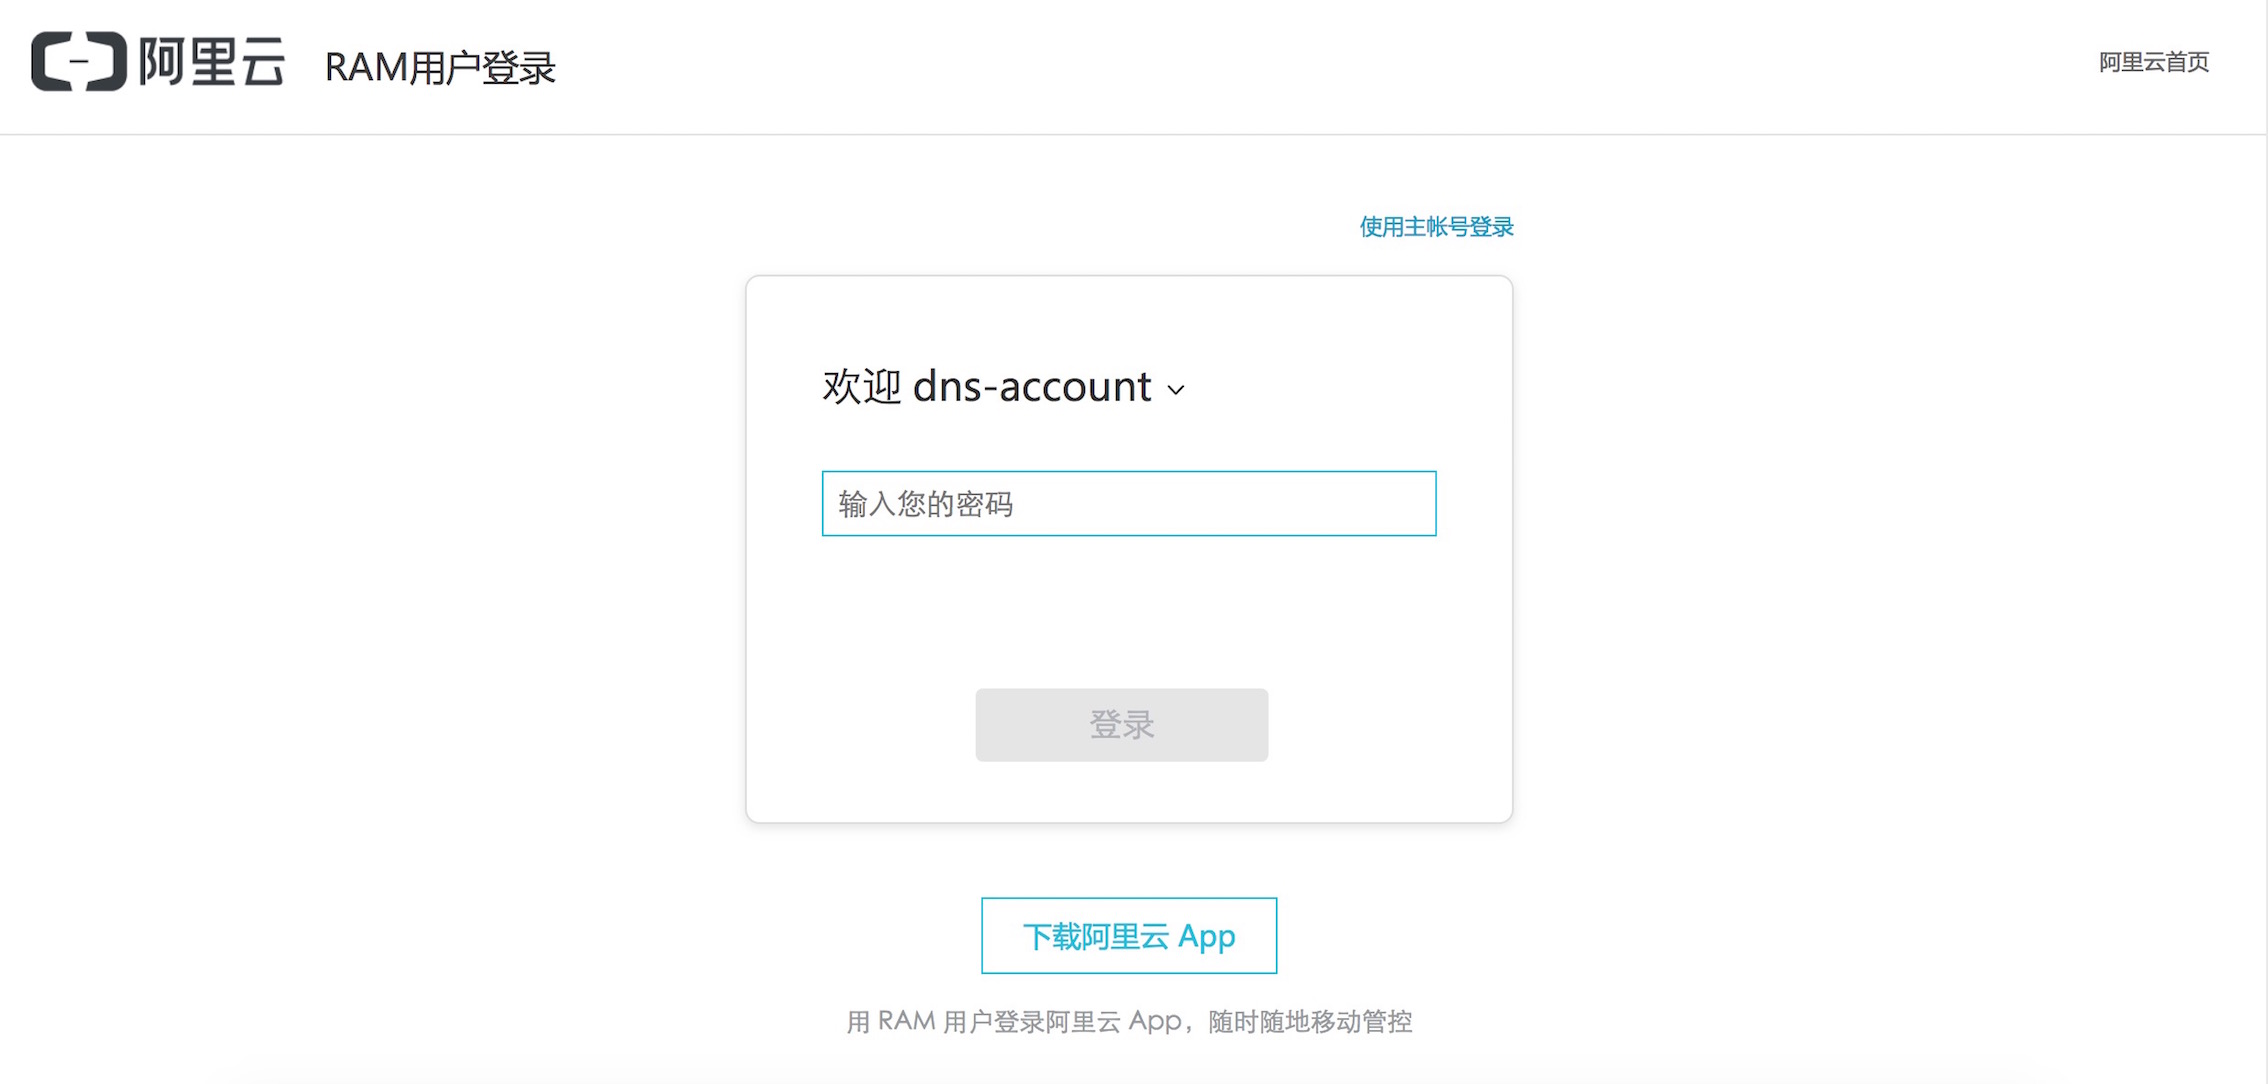 dns-account登录